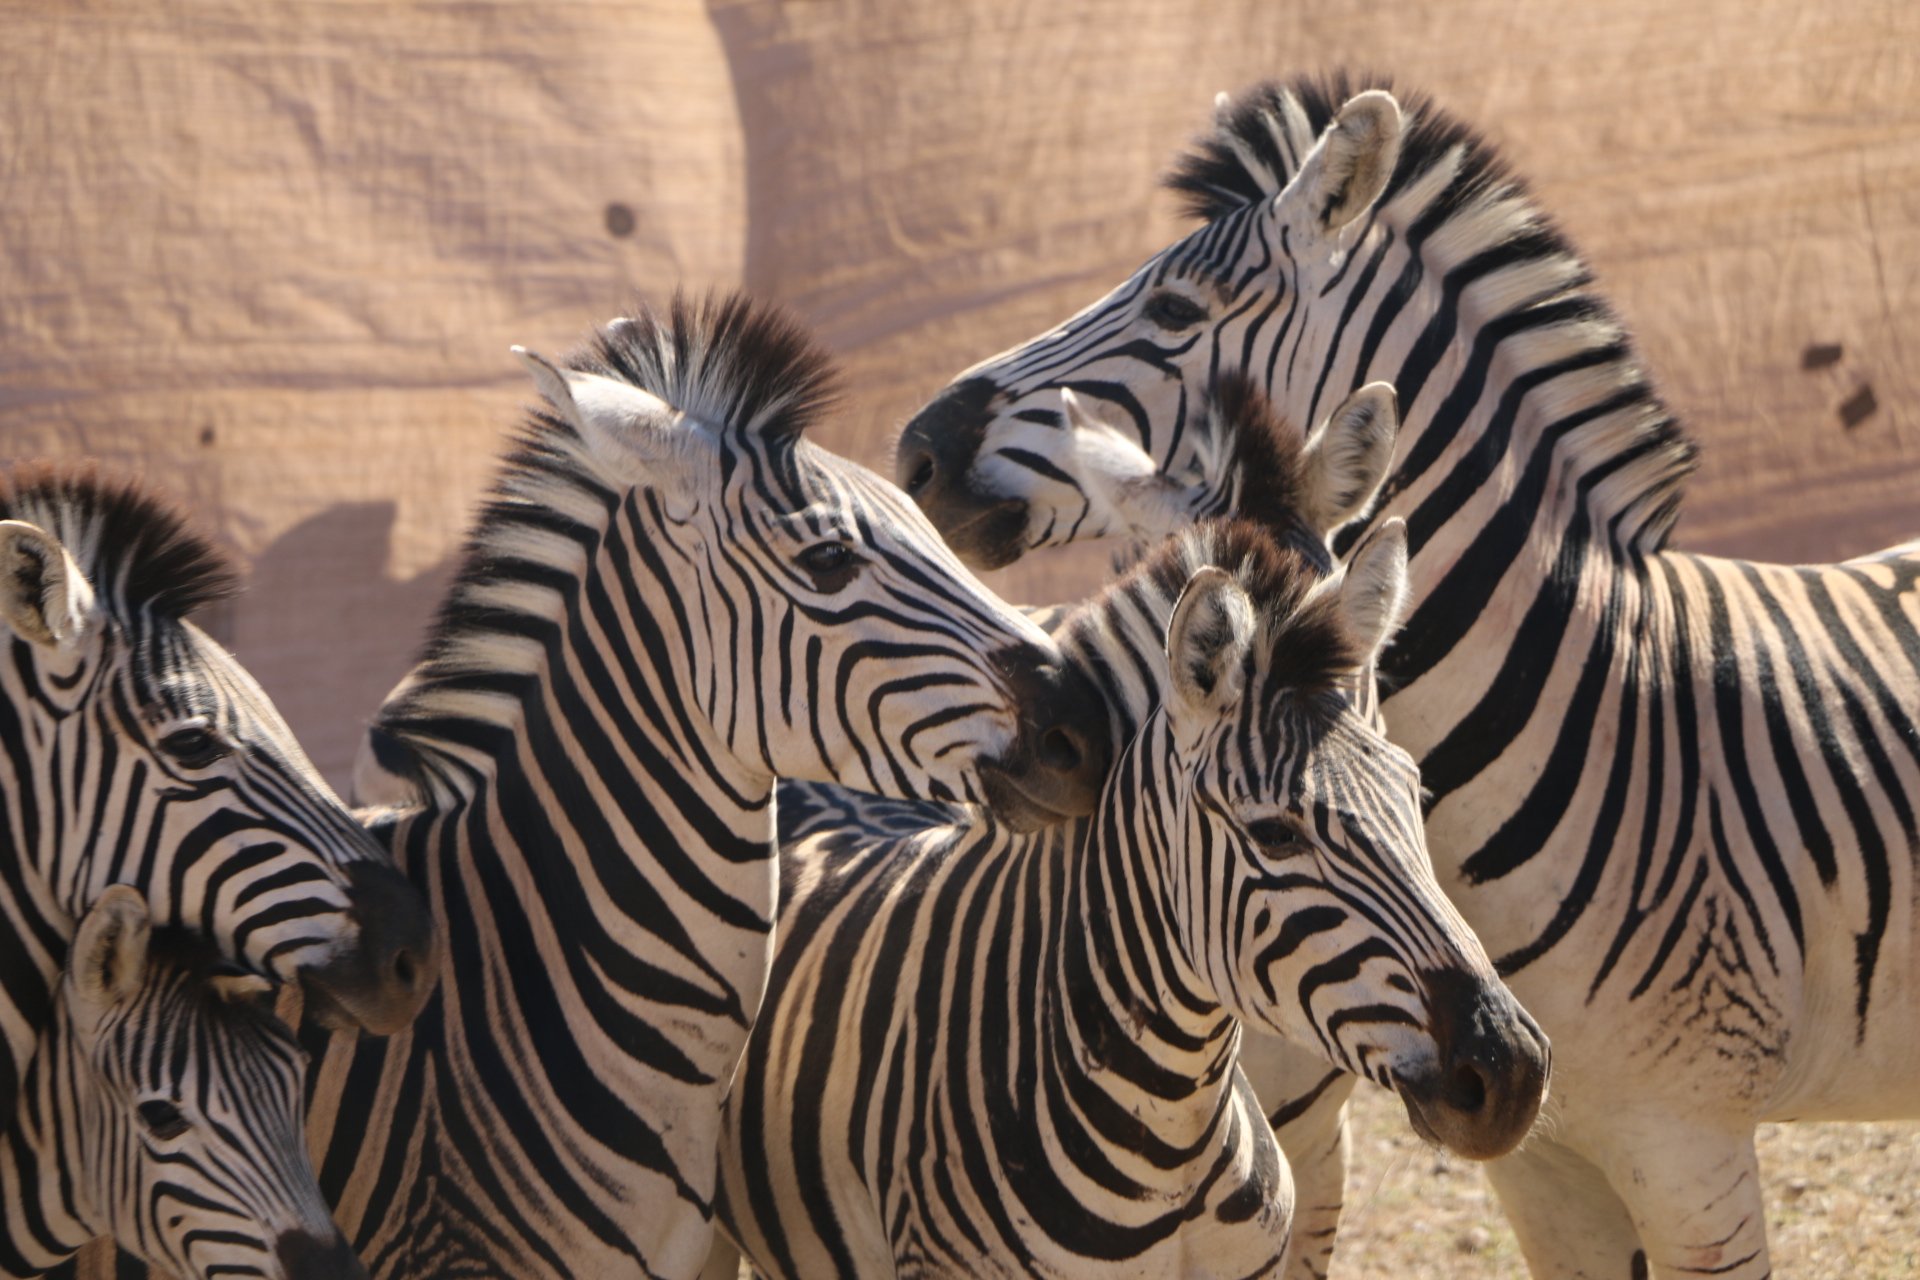 Juvenile zebras